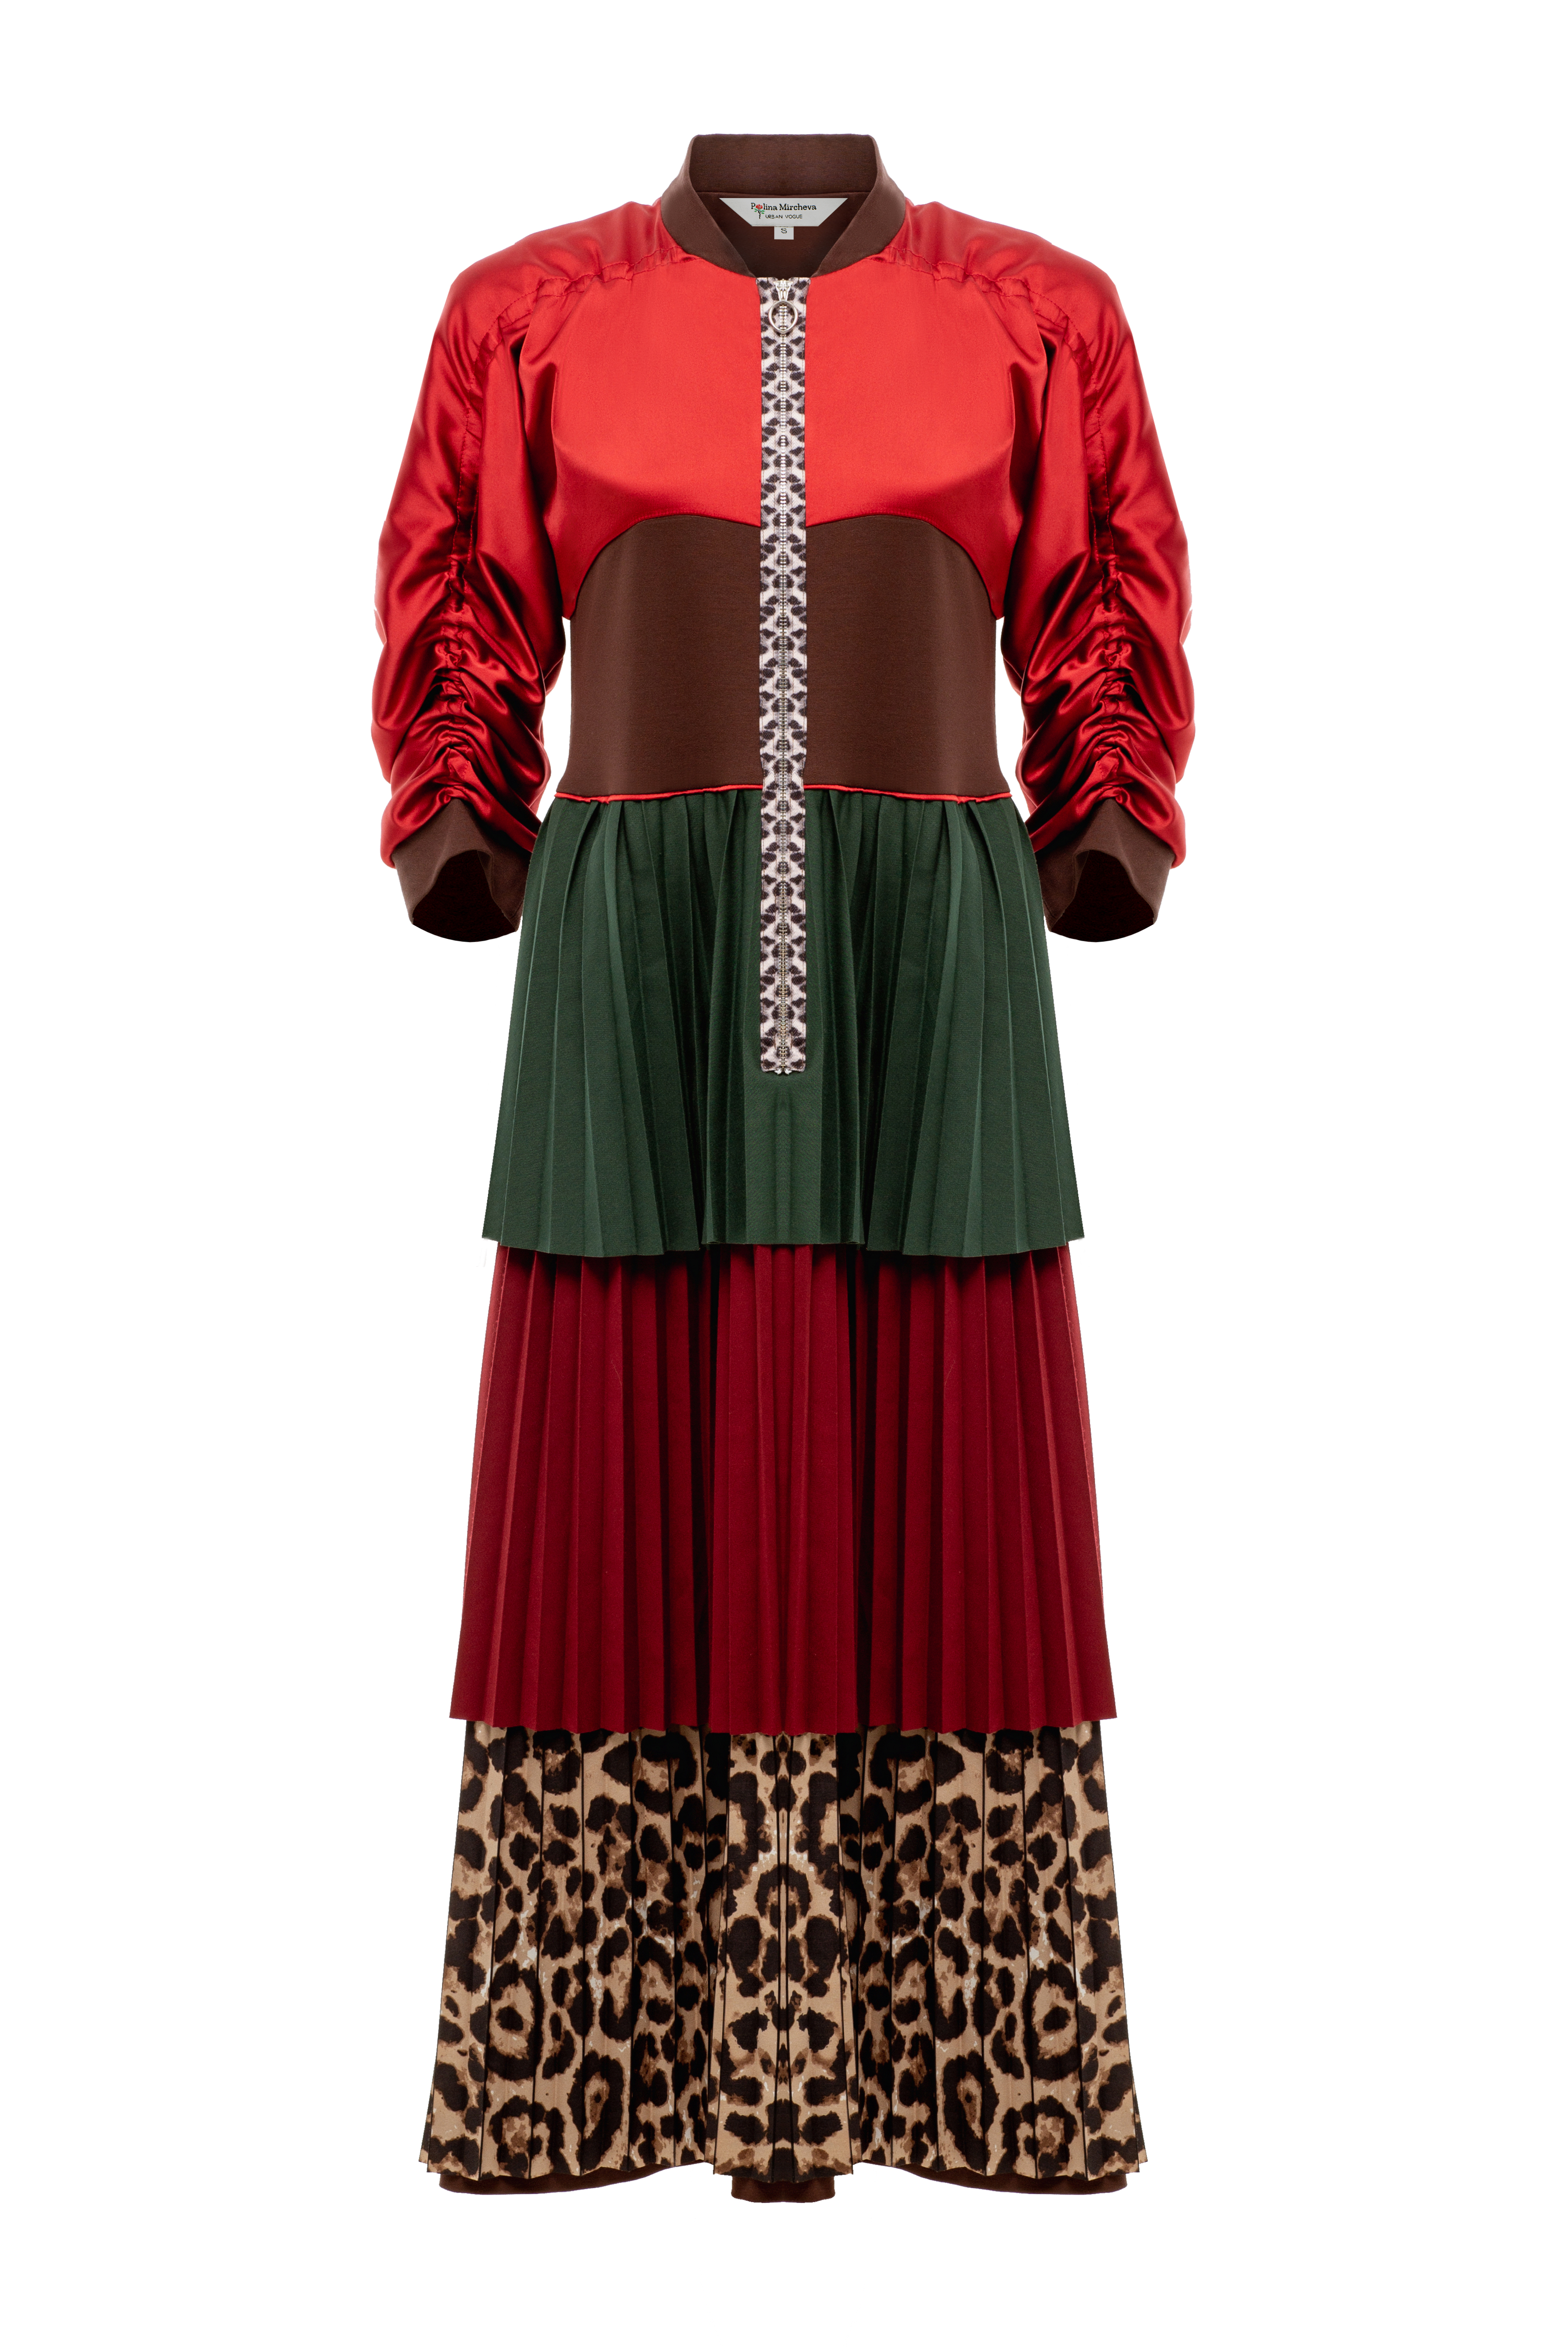 Khaki pleated panel dress (Копировать)